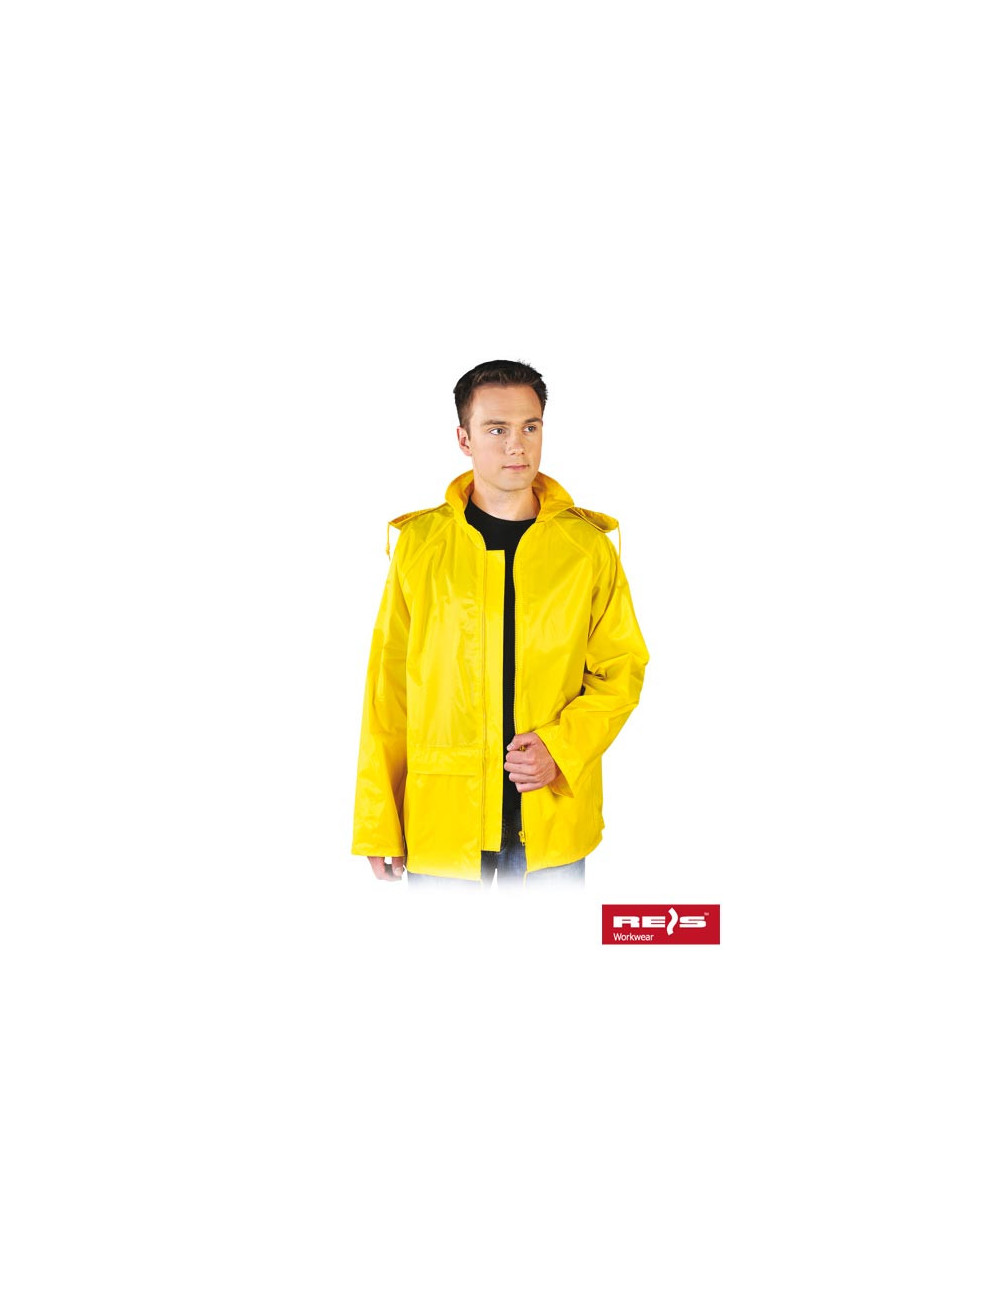 Protective rain jacket kpnp y yellow Reis